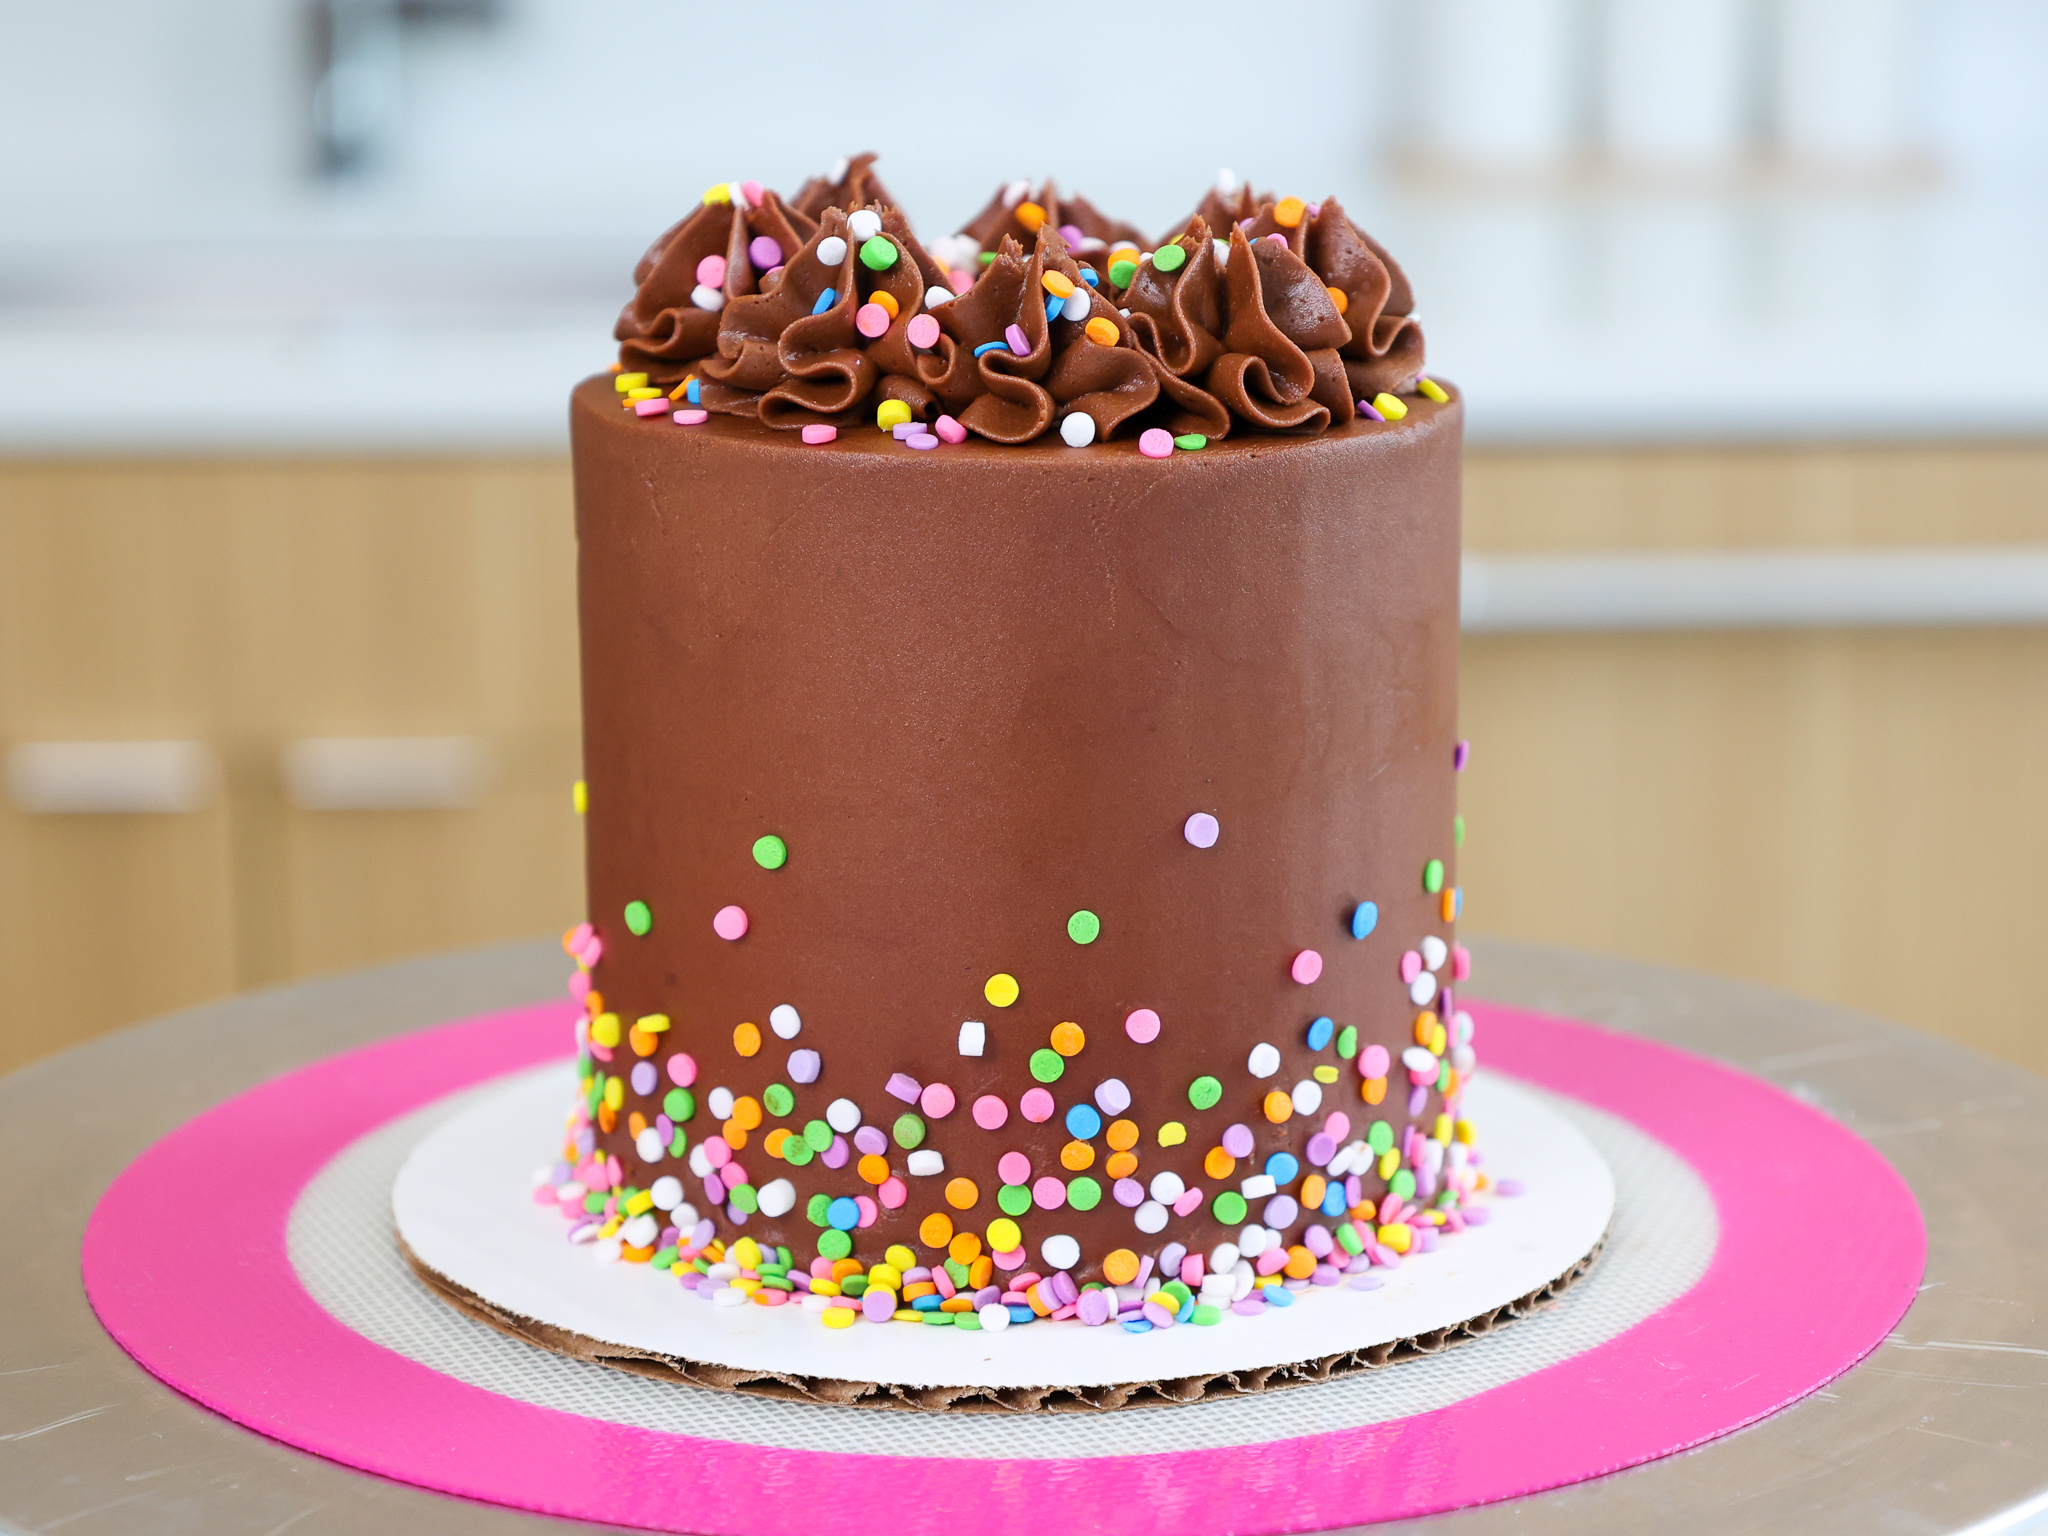 Easy chocolate cake recipes - best chocolate cake recipes